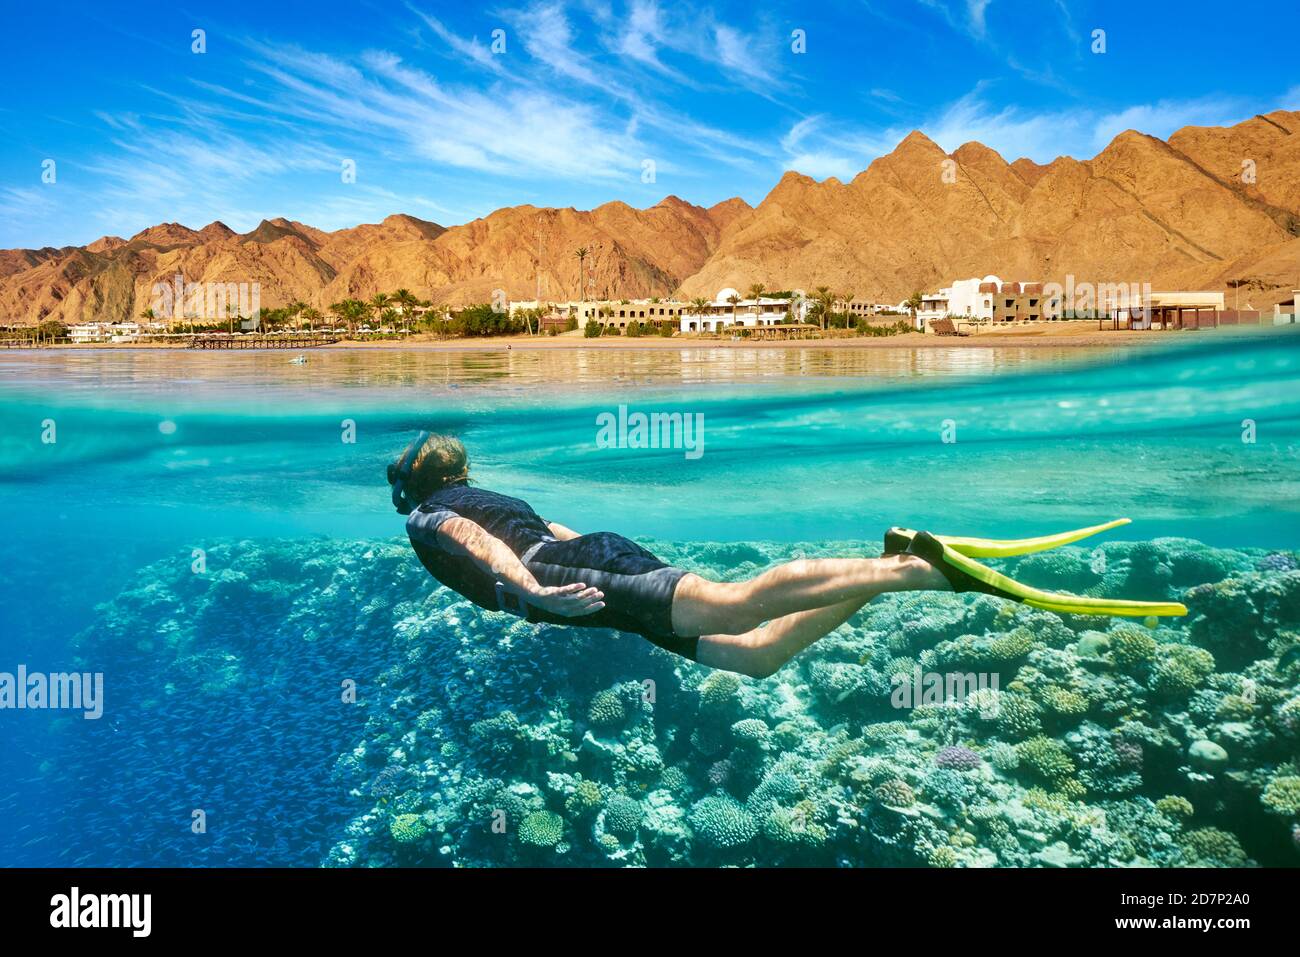 Rotes Meer, Ägypten - Unterwasser, Marsa Alam Riff schnorcheln Stockfoto